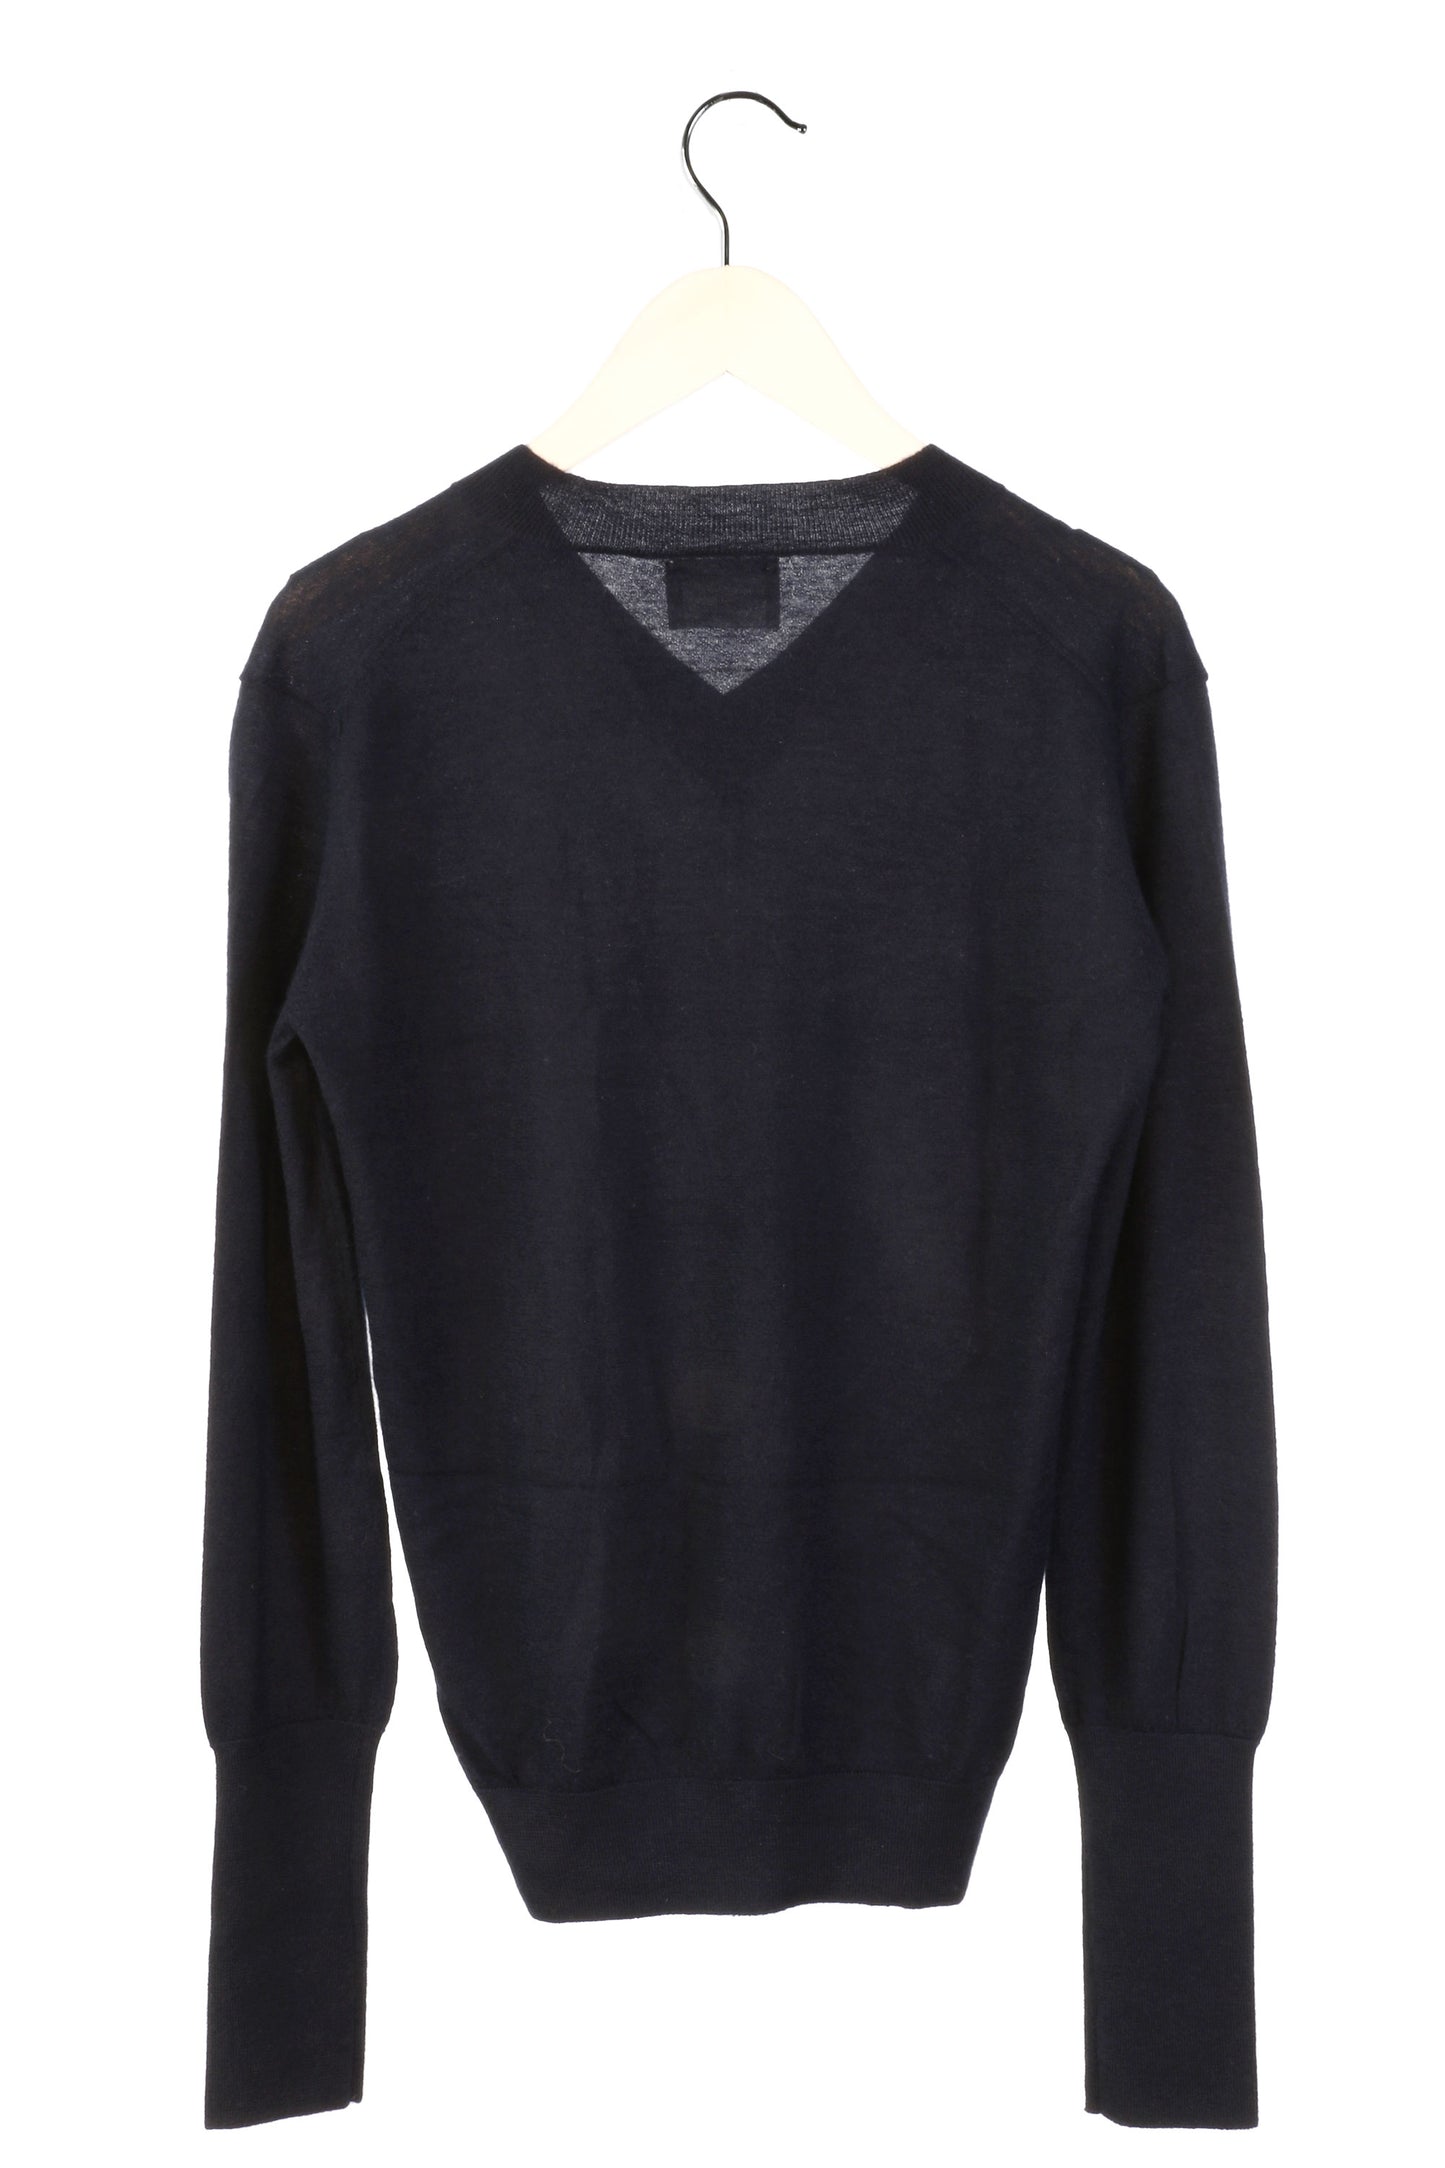 100% Cashmere Navy Lightweight Sweater Medium